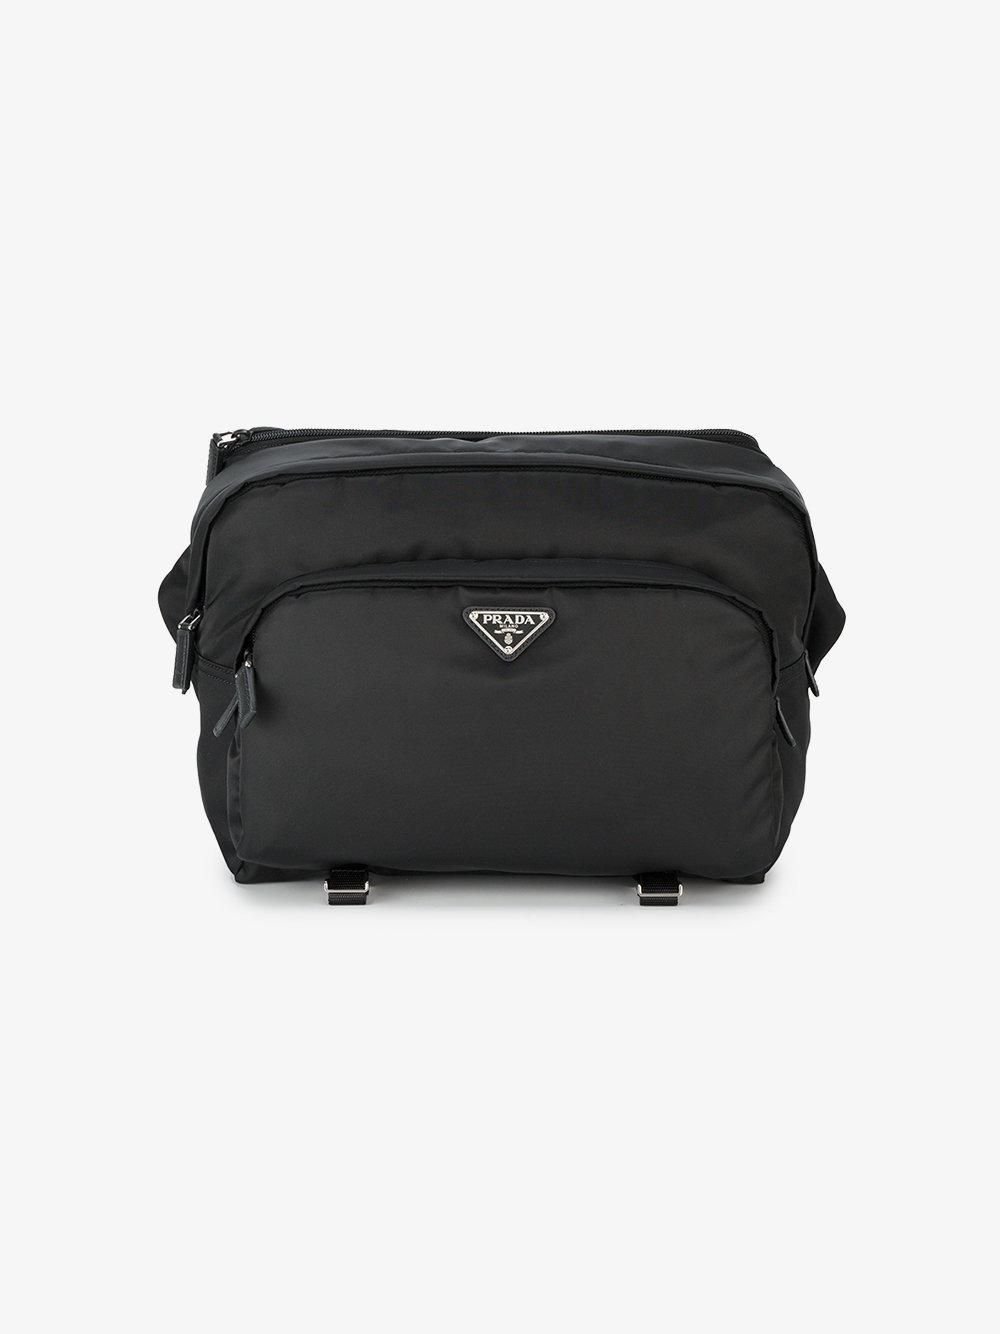 Prada Synthetic Nylon Large Cross Body Bag in Black for Men - Lyst